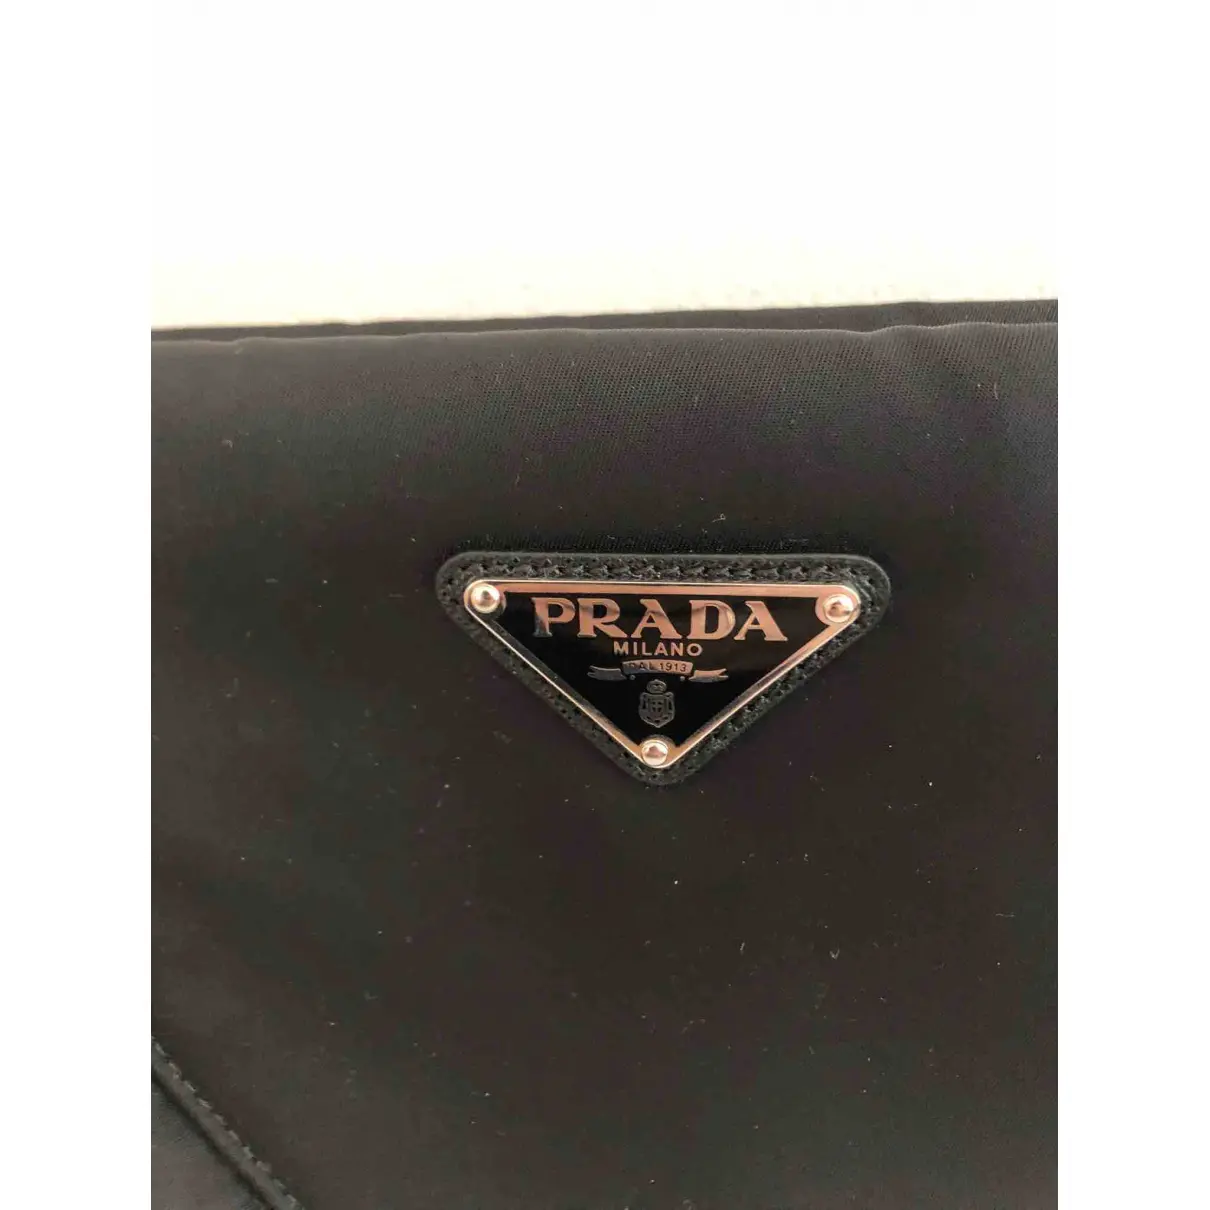 Elektra handbag Prada